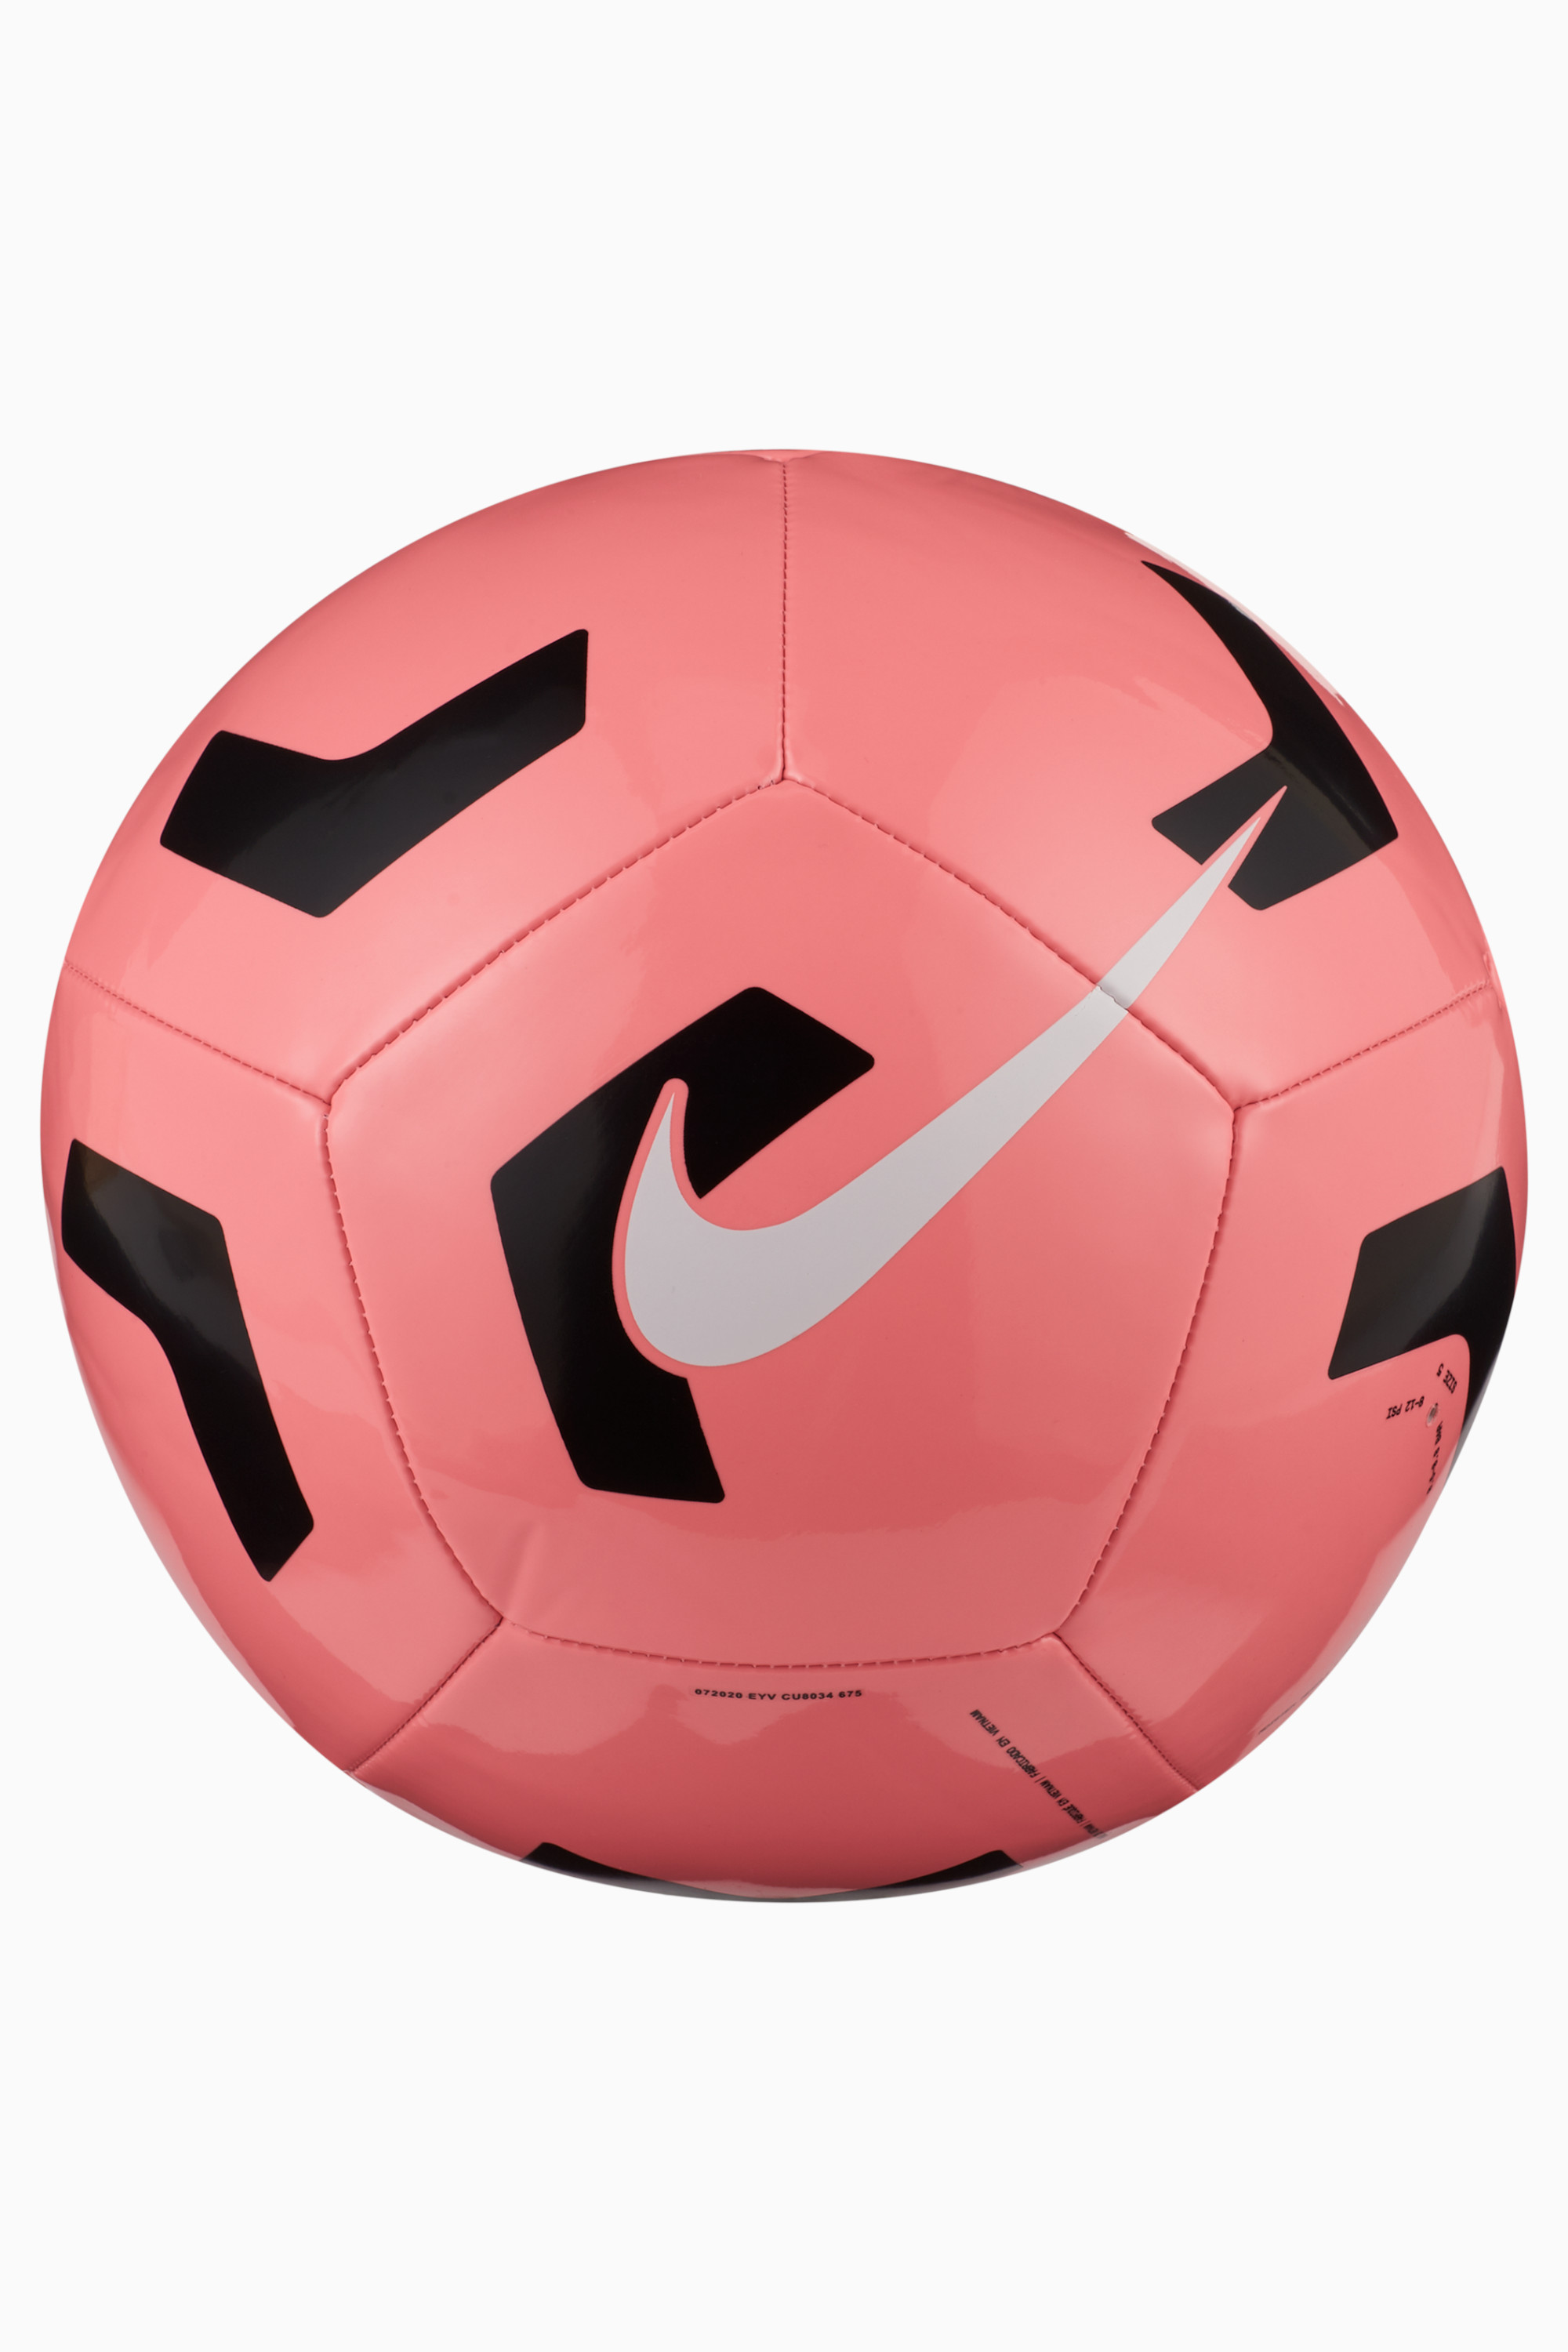 nike soccer ball size 4